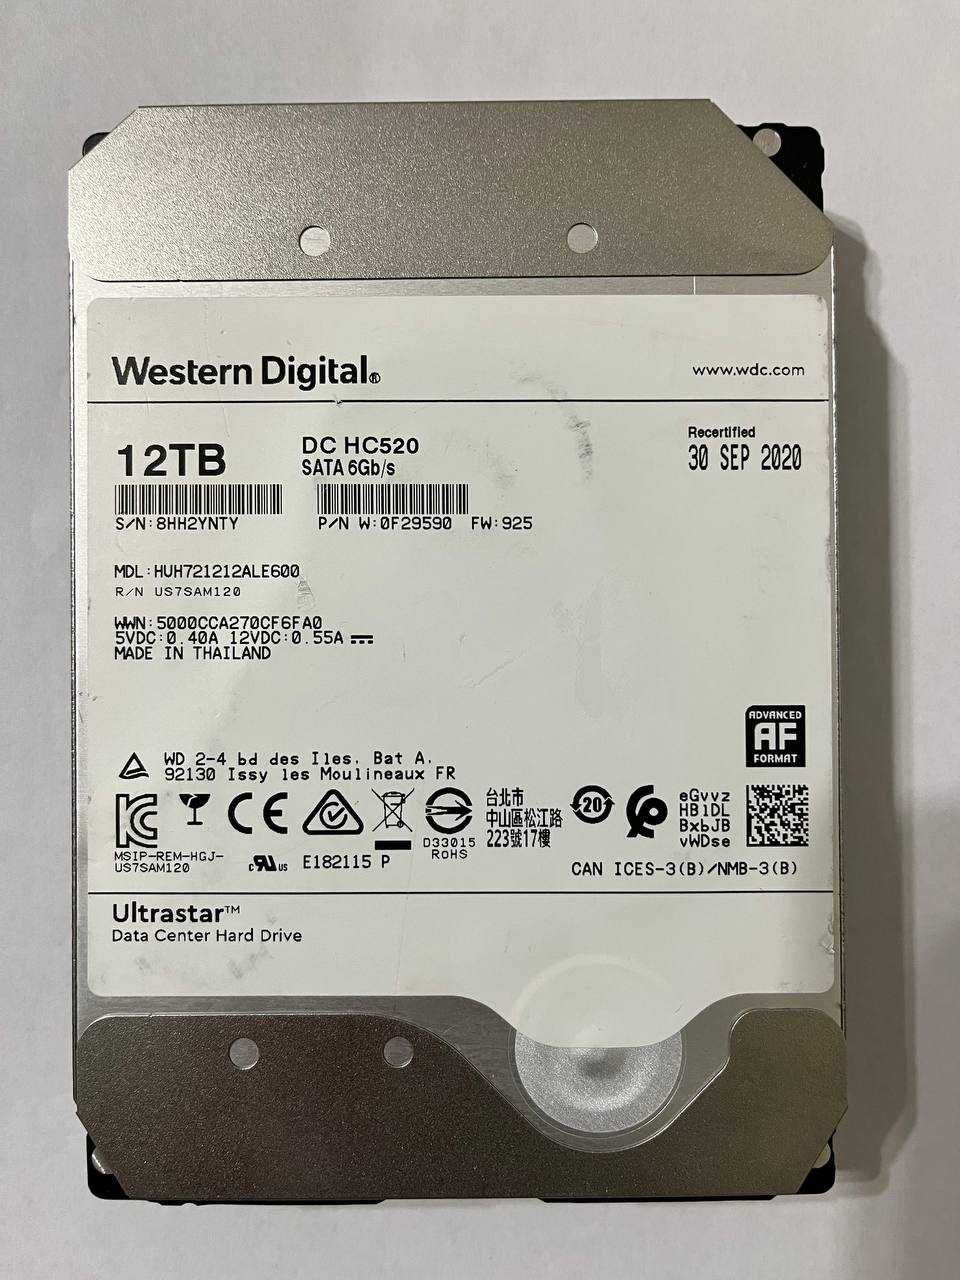 Жесткий Диск Western Digital DC HC520 12TB SATA III (HUH711212ALE600)